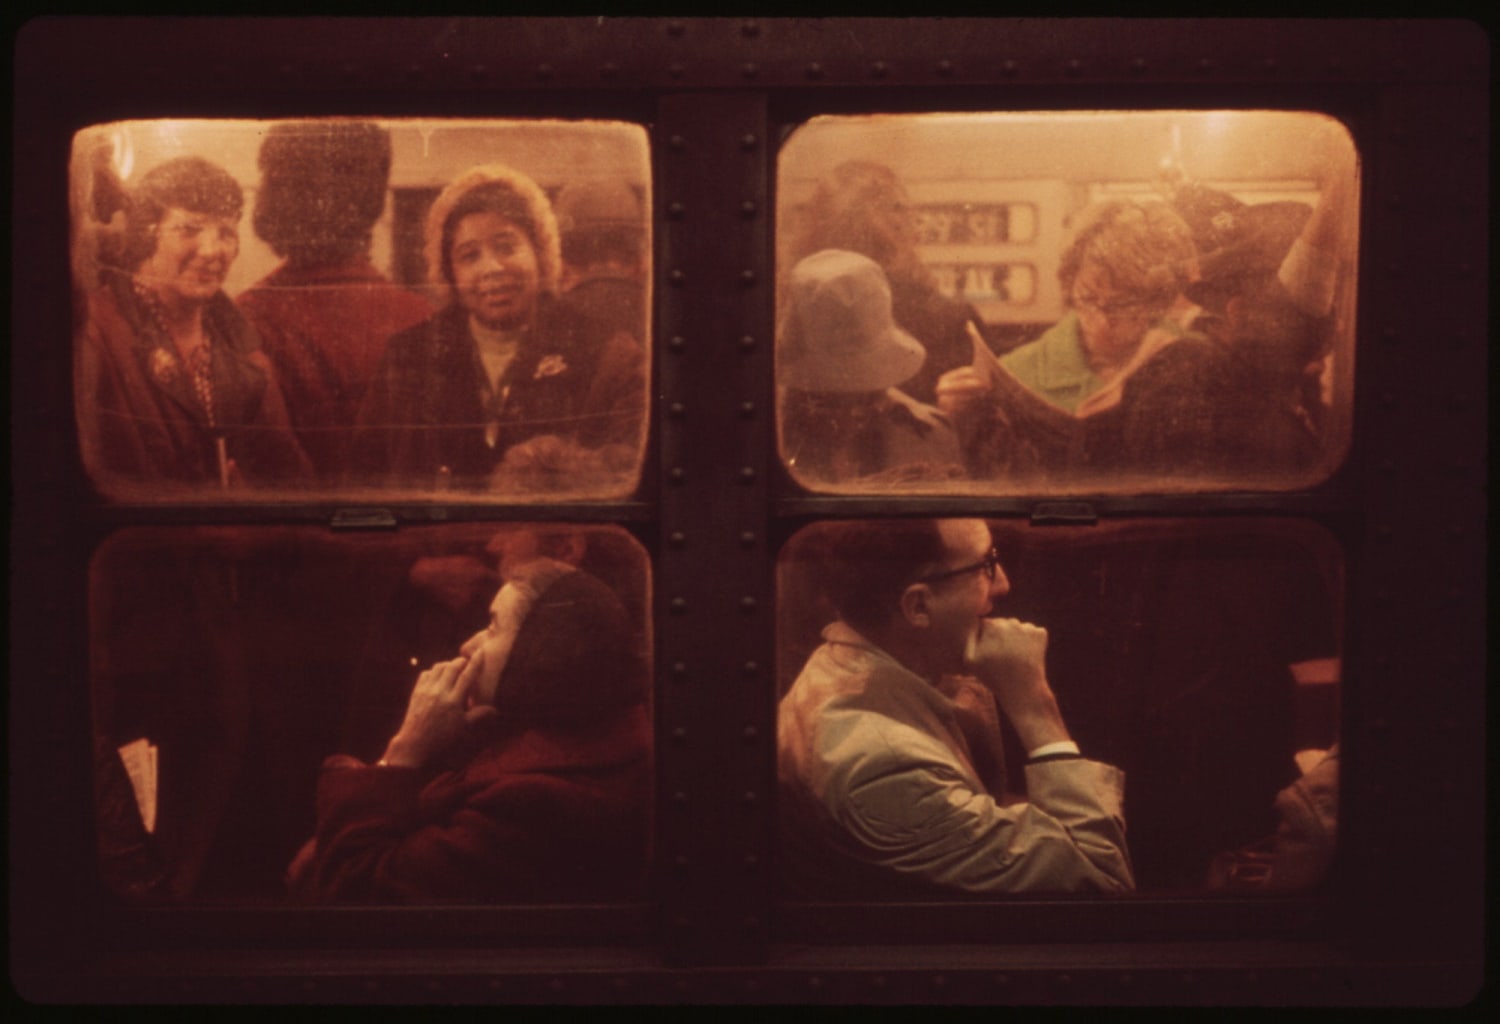 Subway car, New York, August 1973